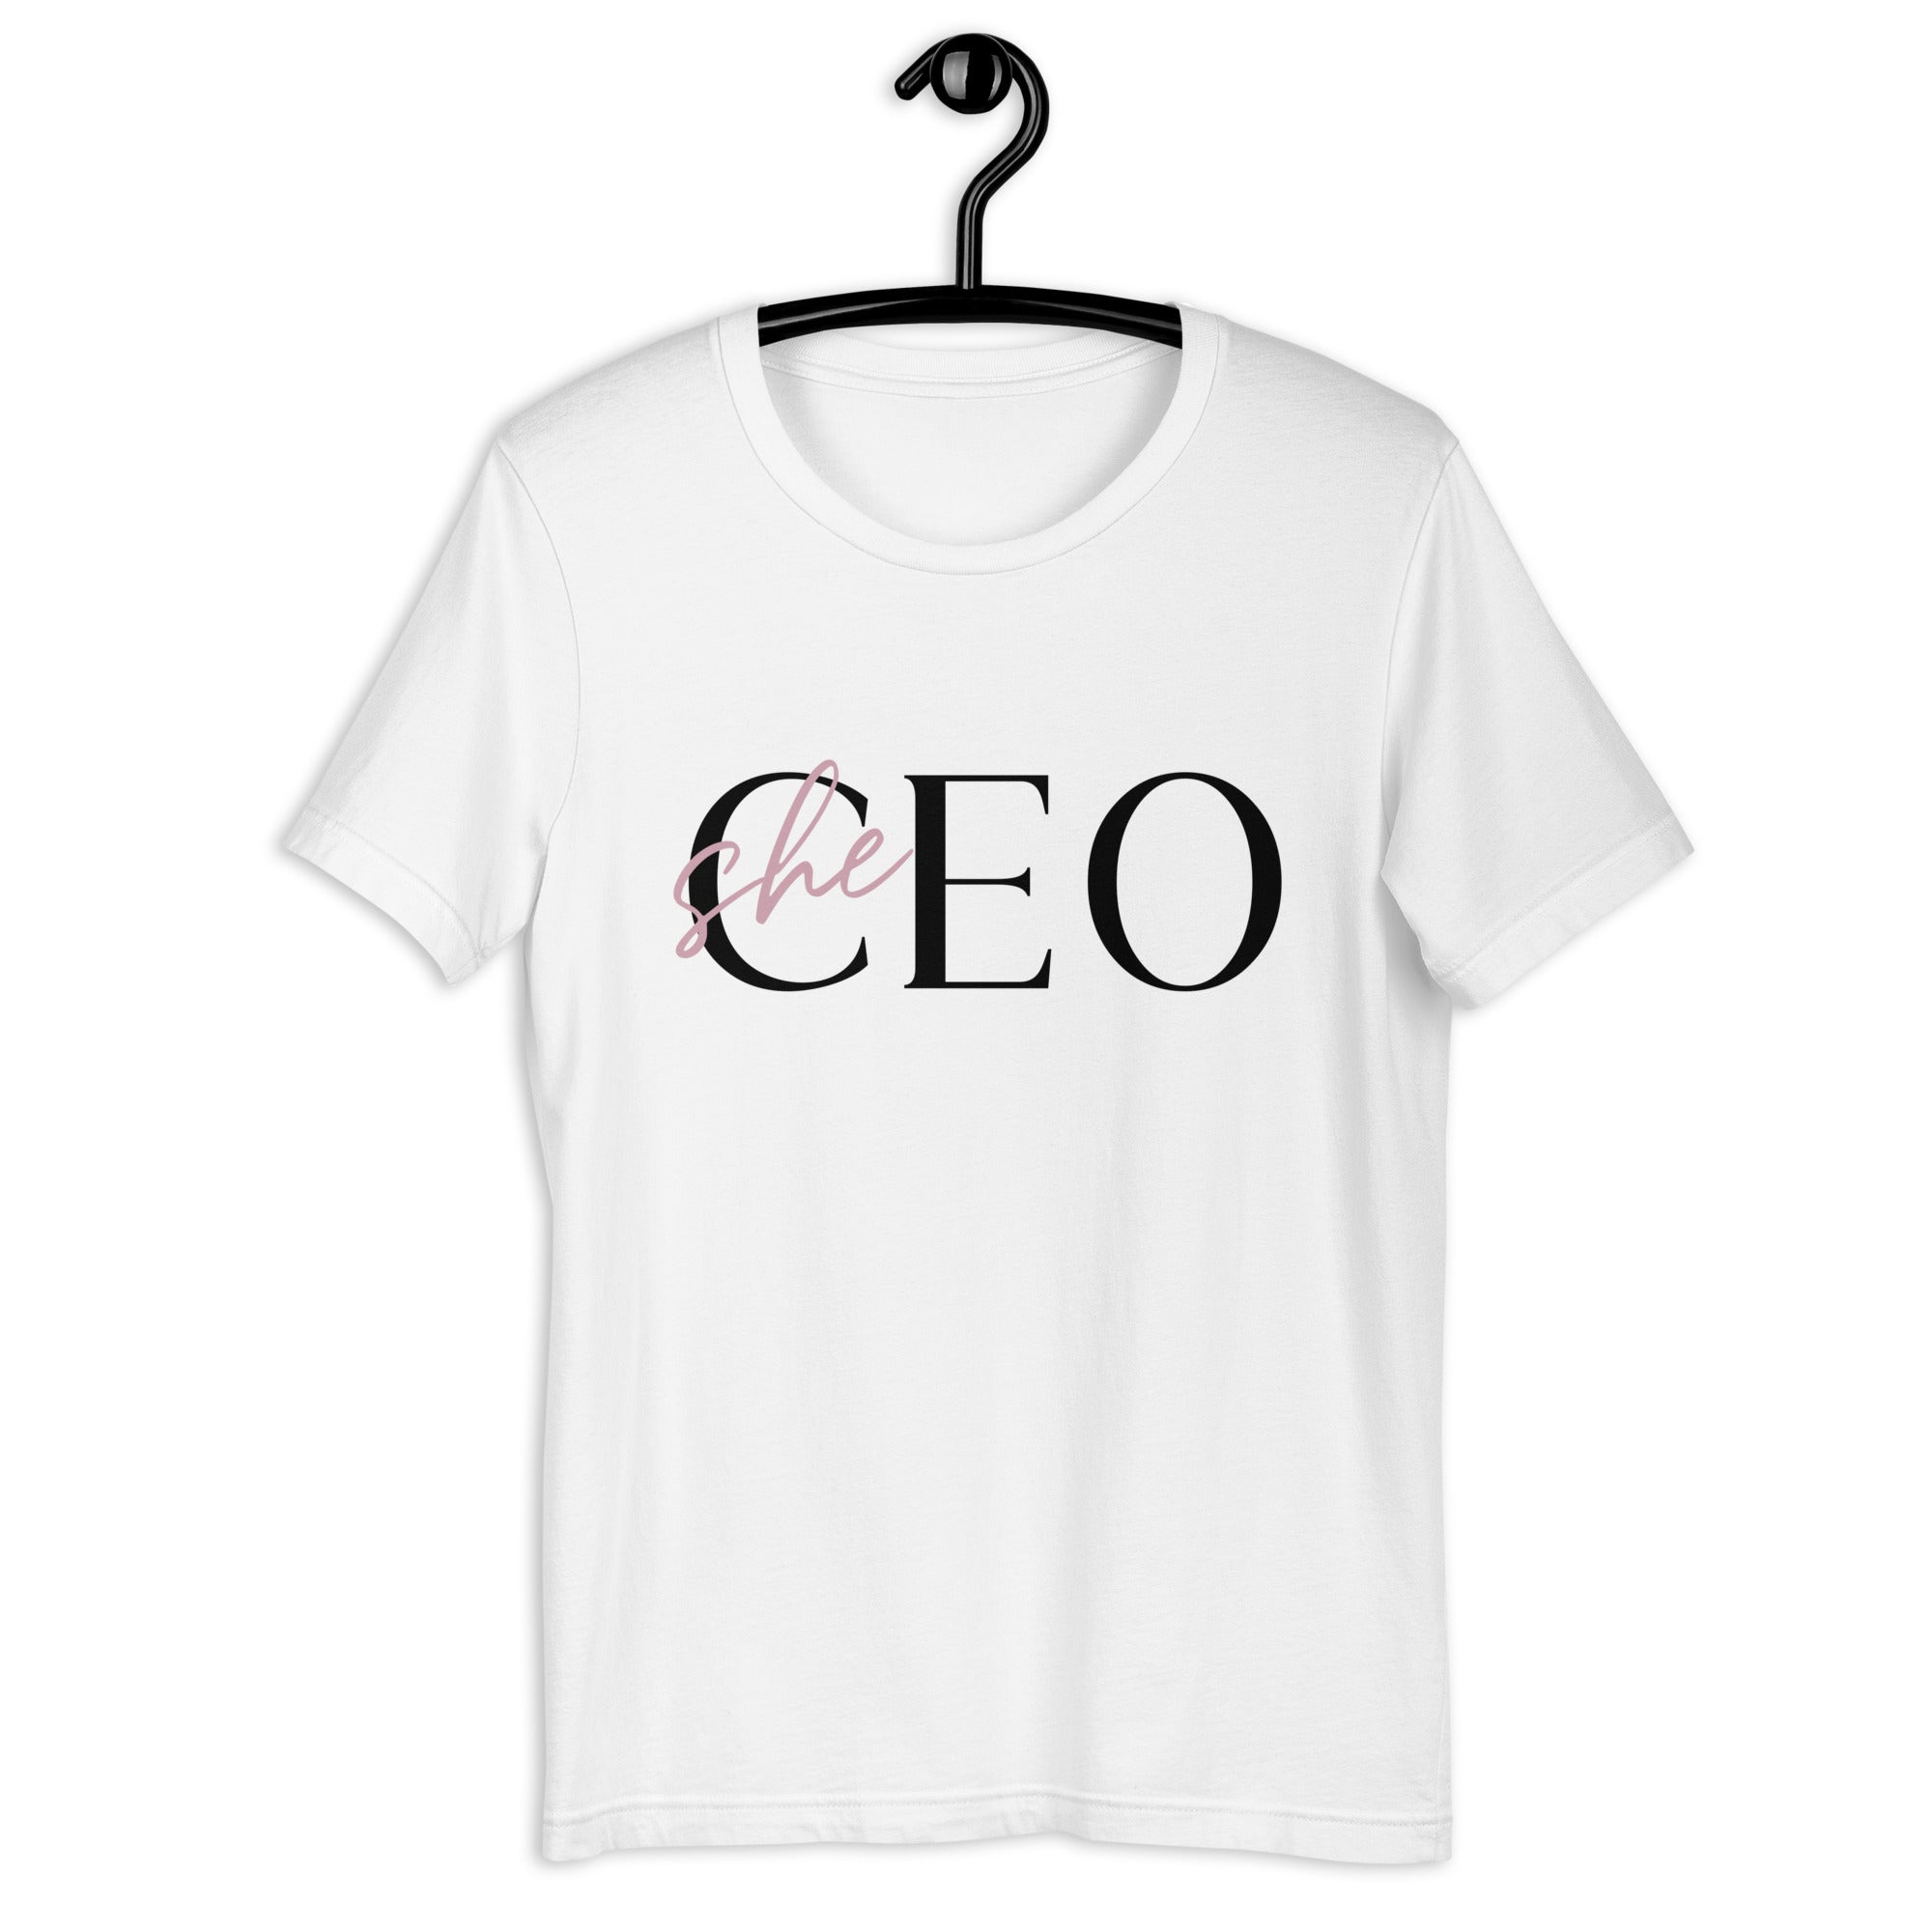 "SHE" CEO